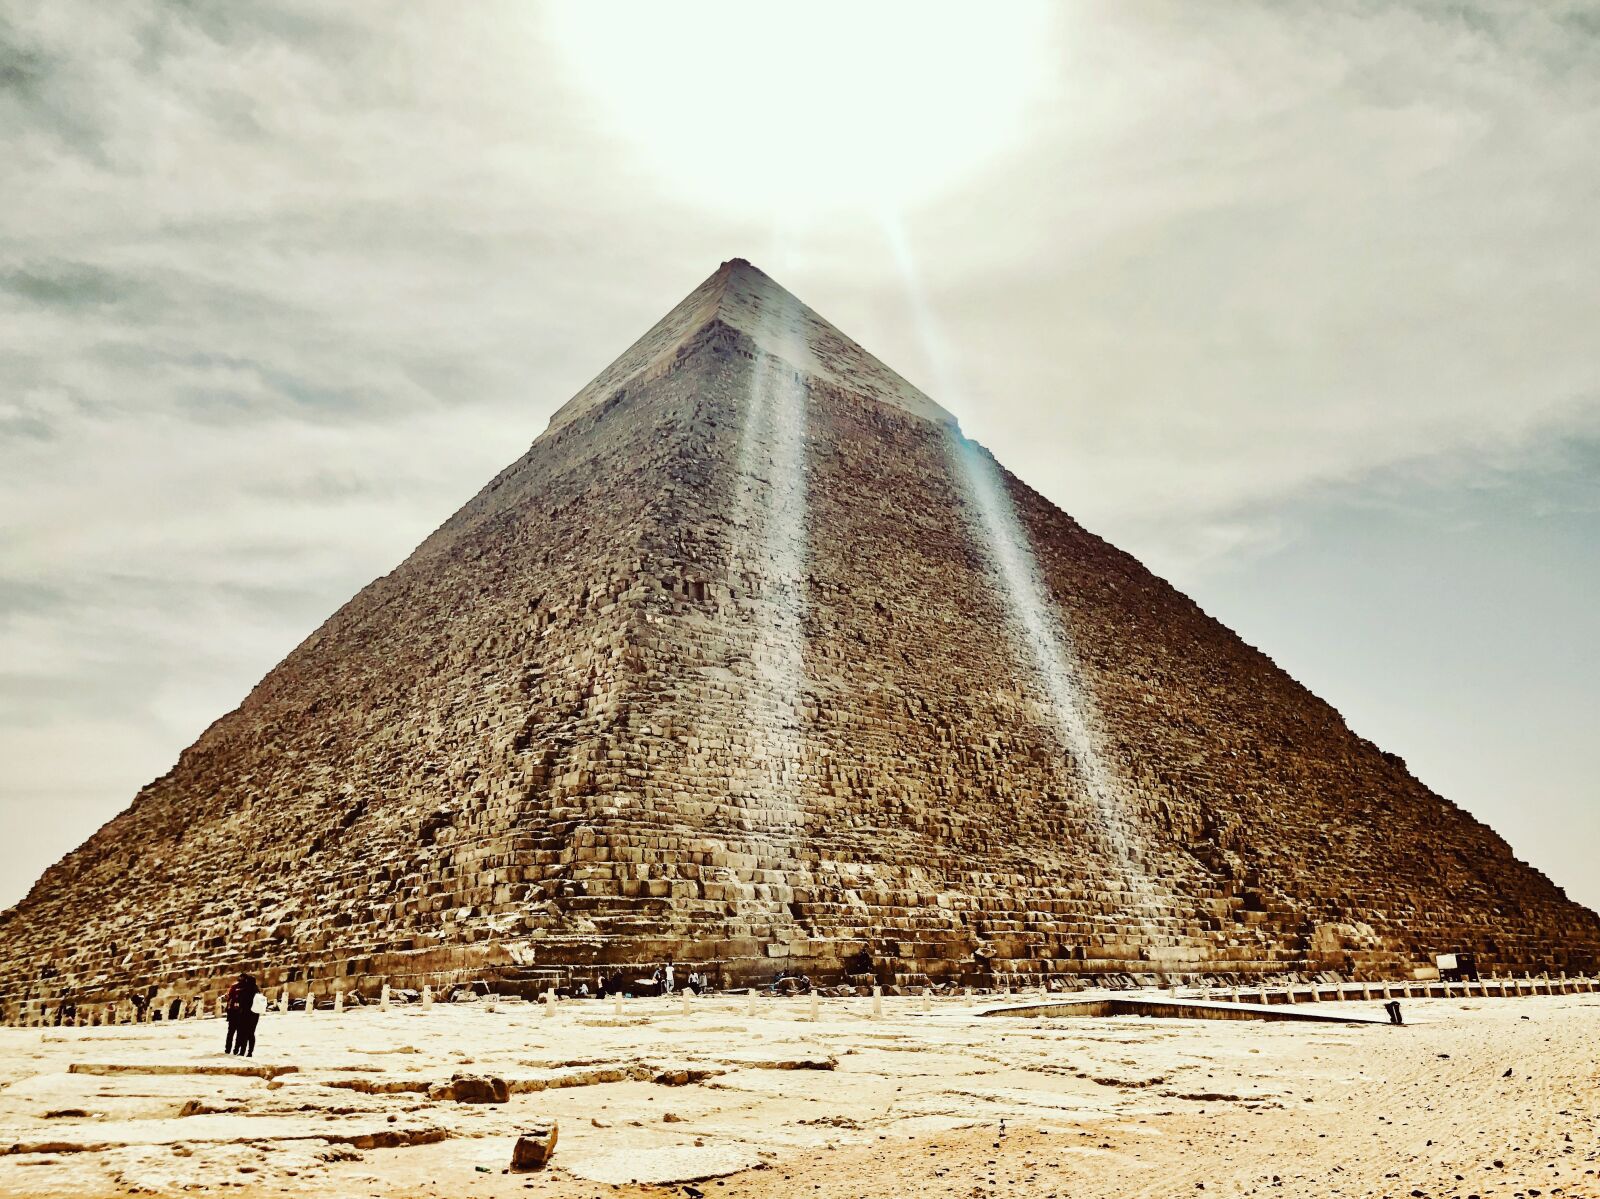 Apple iPhone X + iPhone X back dual camera 4mm f/1.8 sample photo. Pyramid, egypt, sun photography